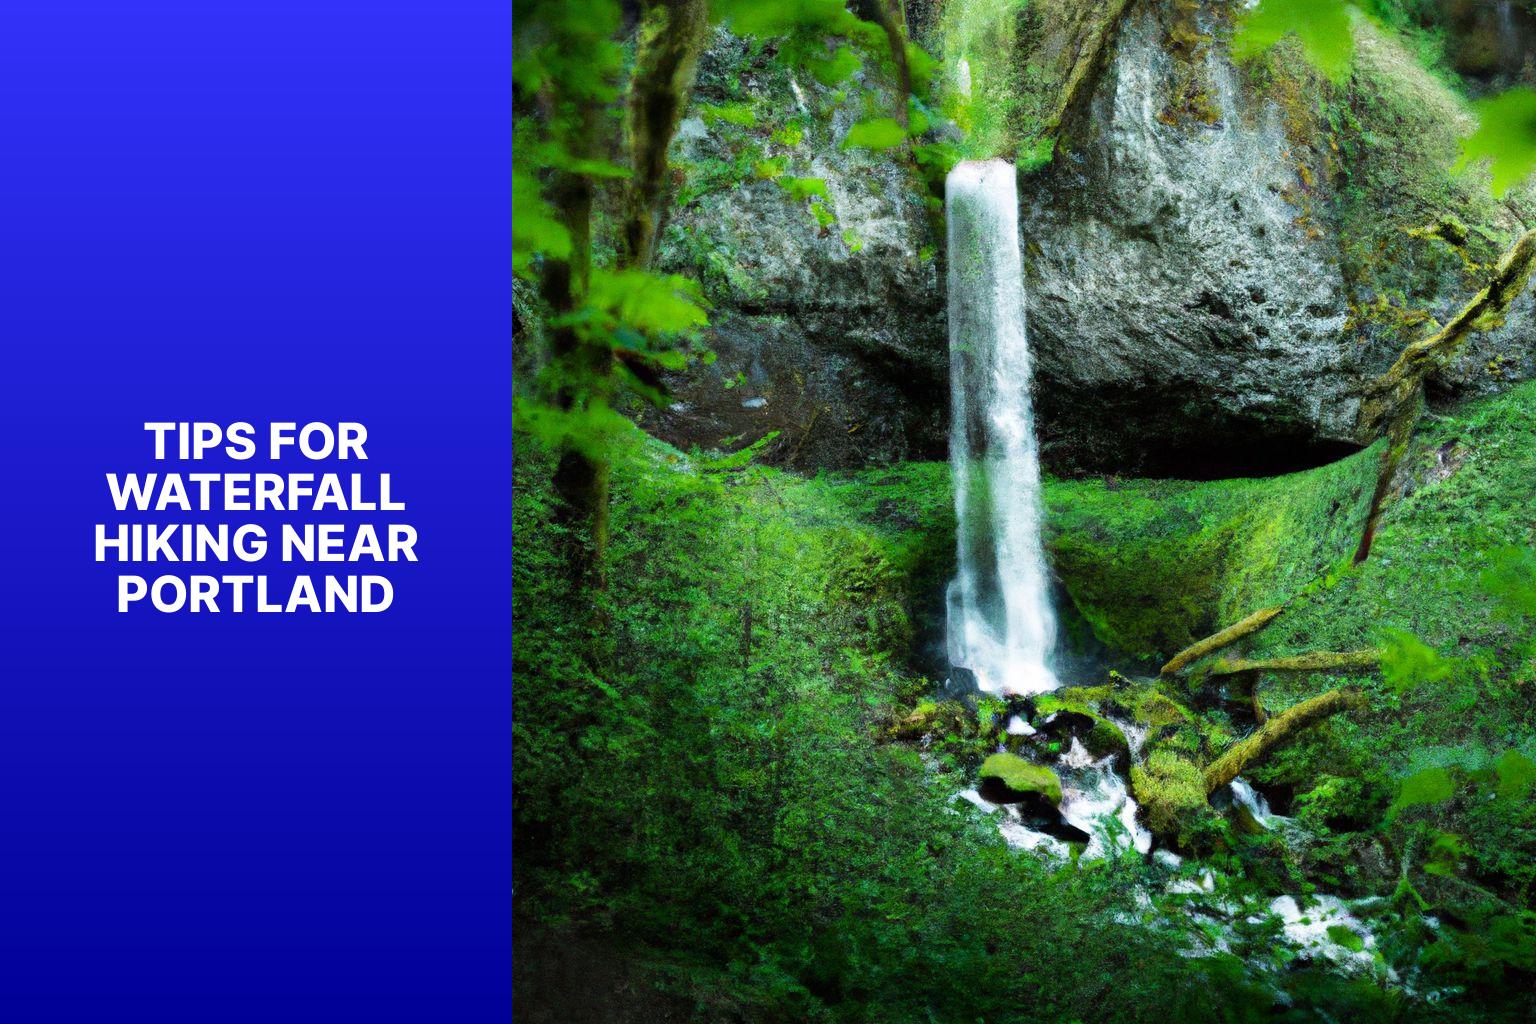 Tips for Waterfall Hiking Near Portland - Waterfall Hikes Near Portland 